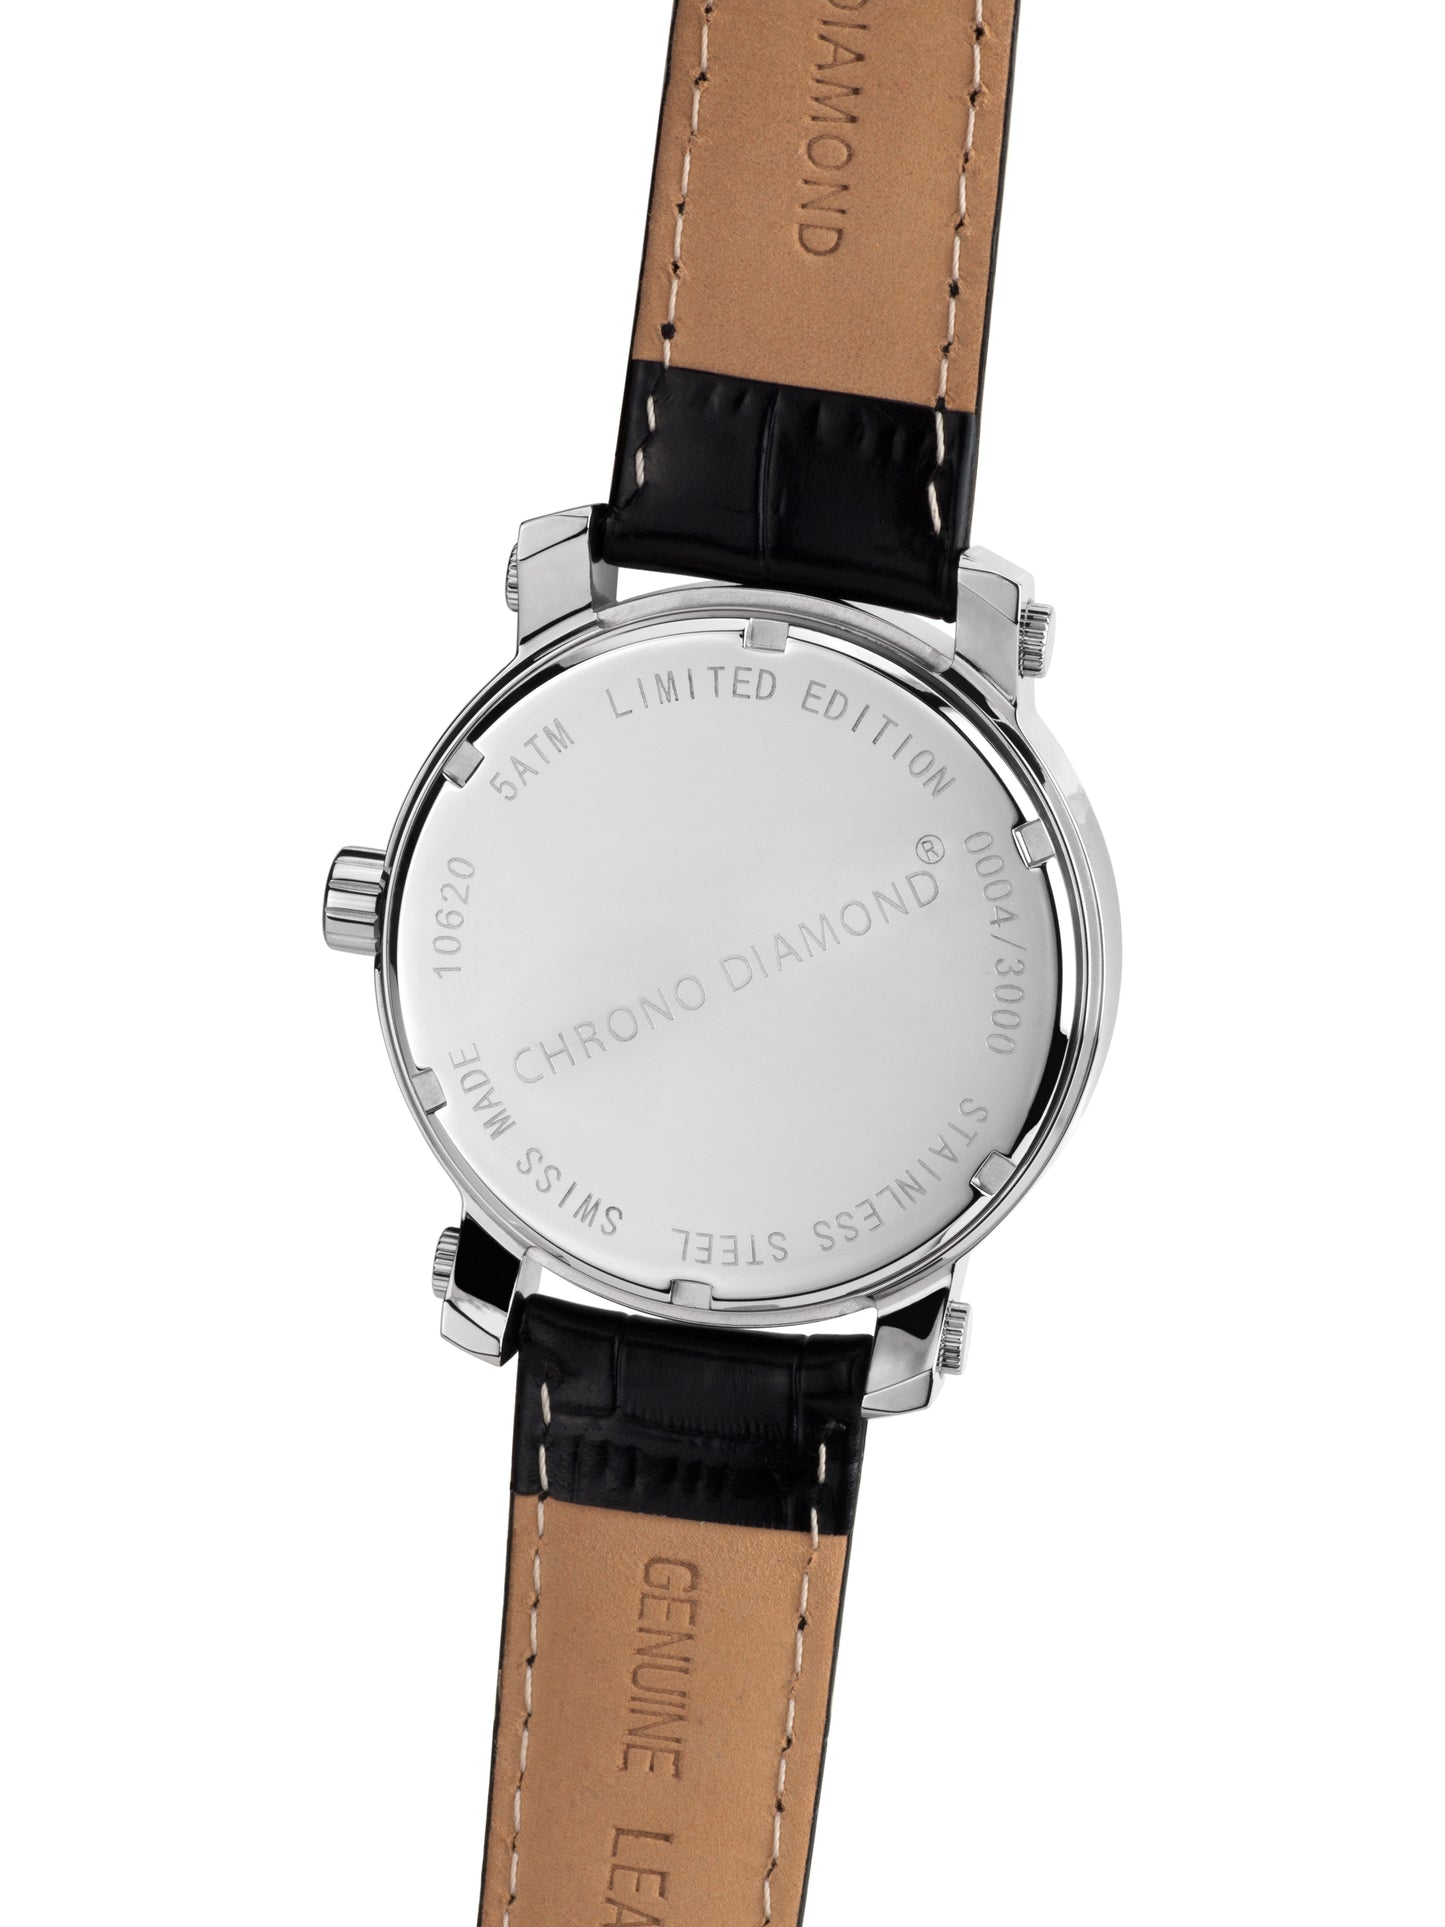 Automatic watches — Nestorius — Chrono Diamond — steel black leather